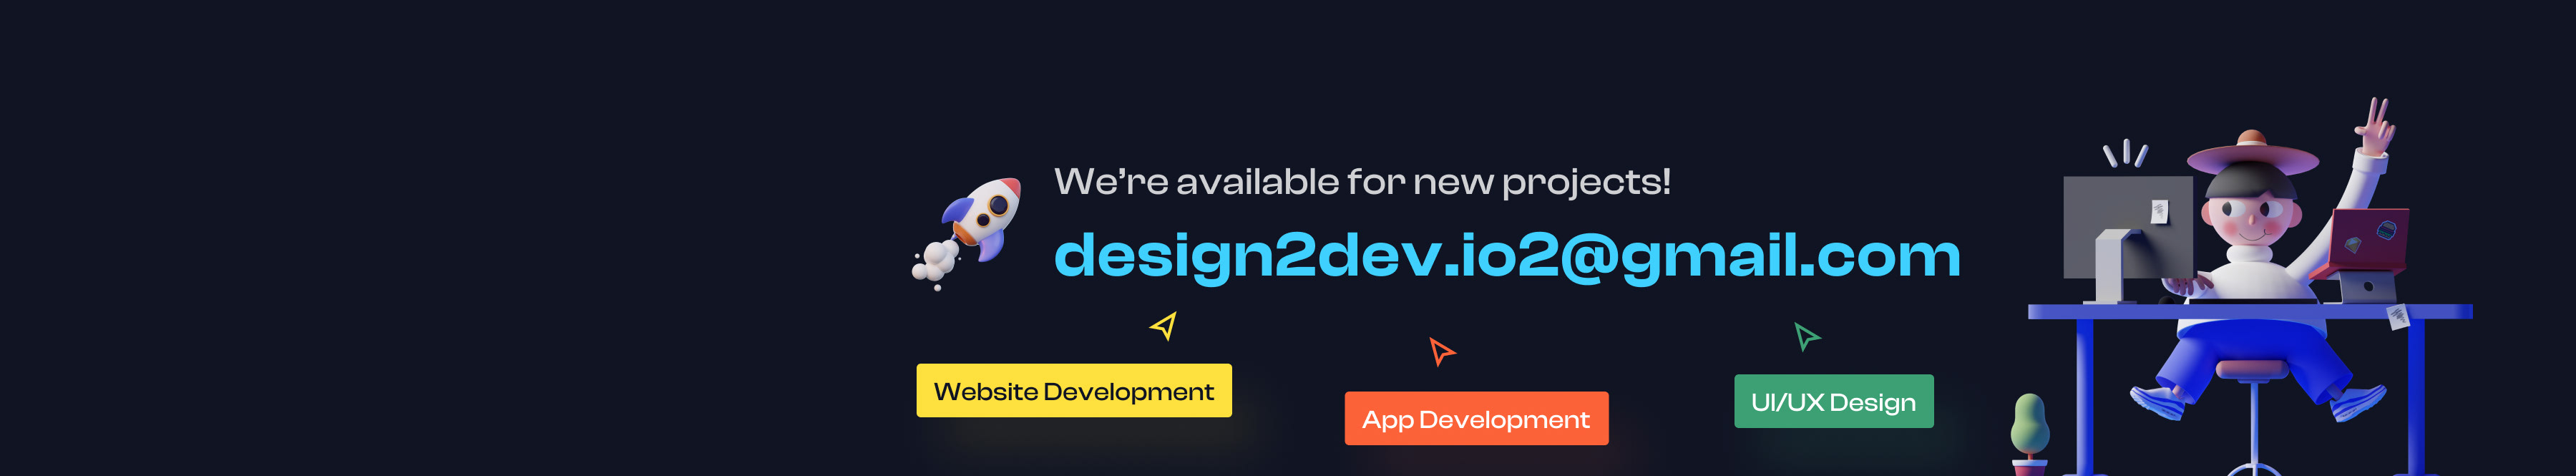 Design2dev Agency's profile banner